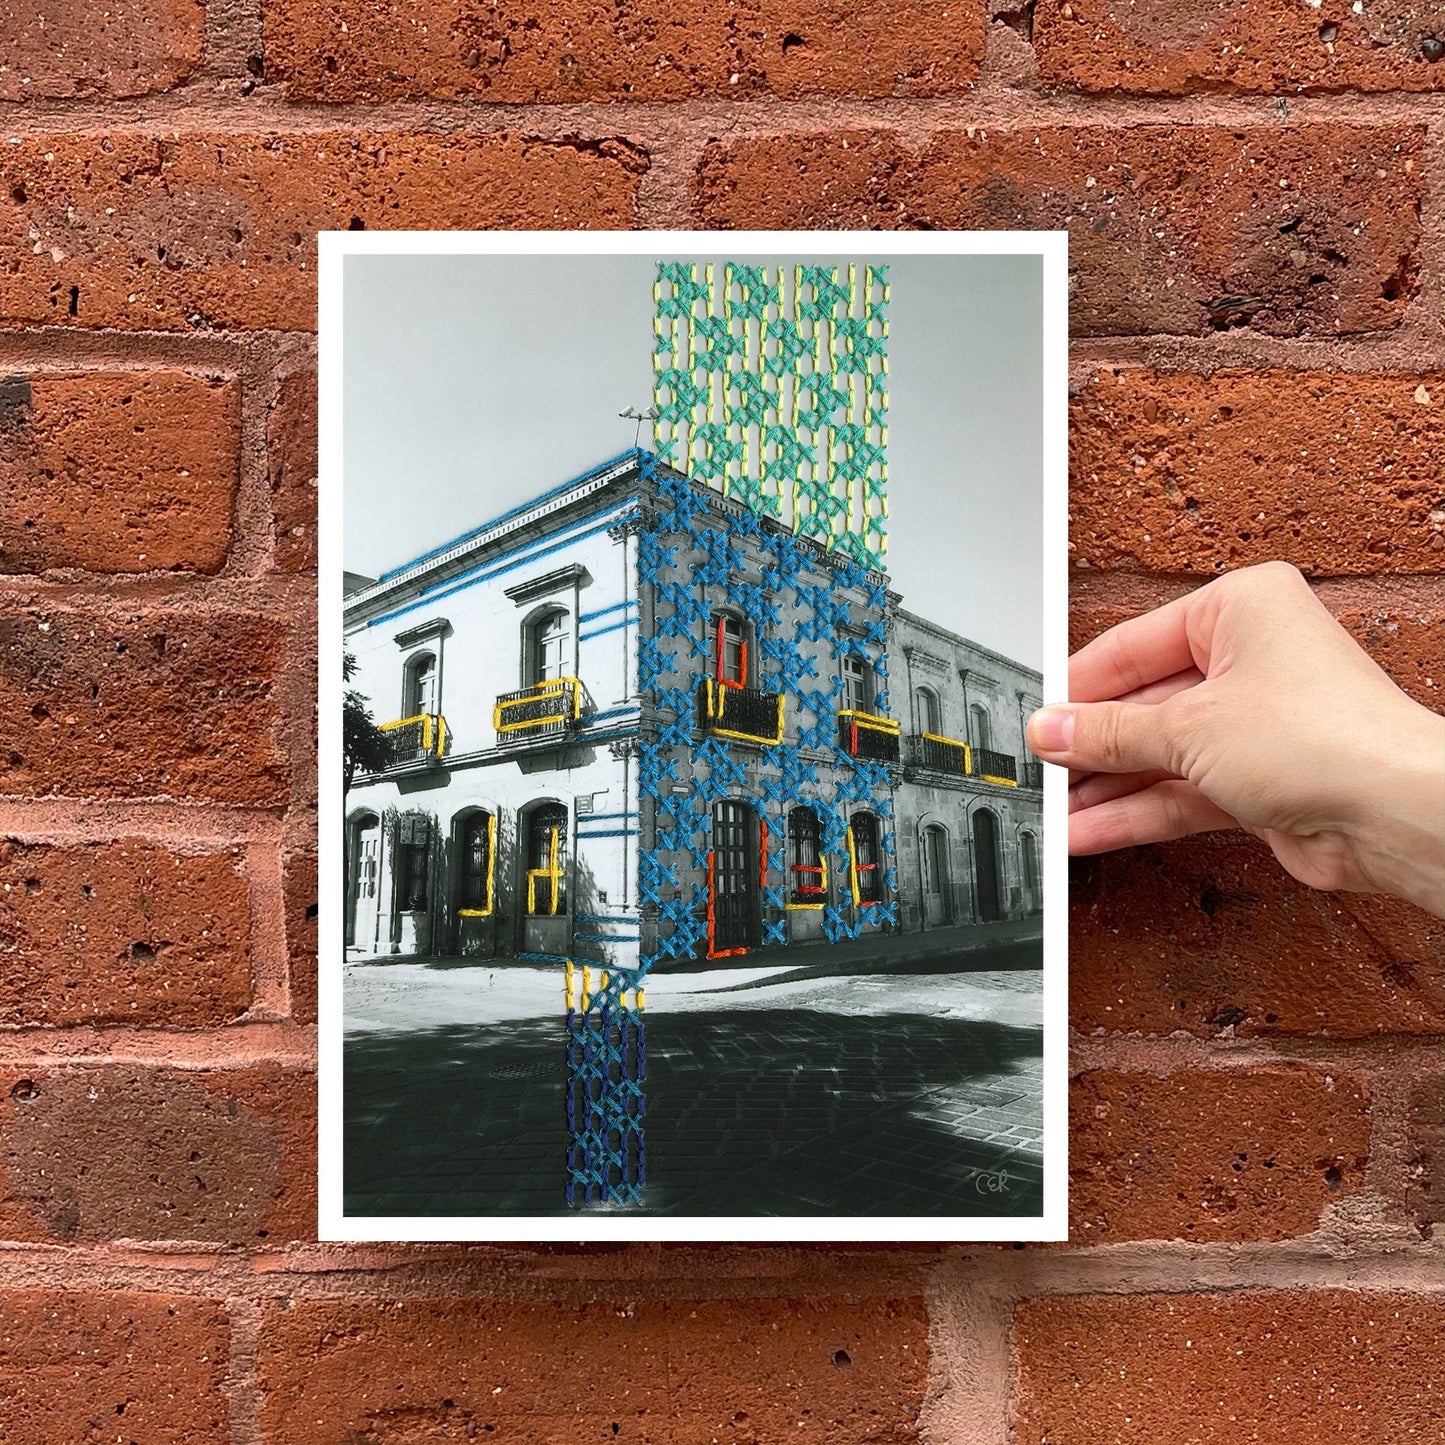 Cross stitch cross street: Hand embroidery art print - Catalina Escallon